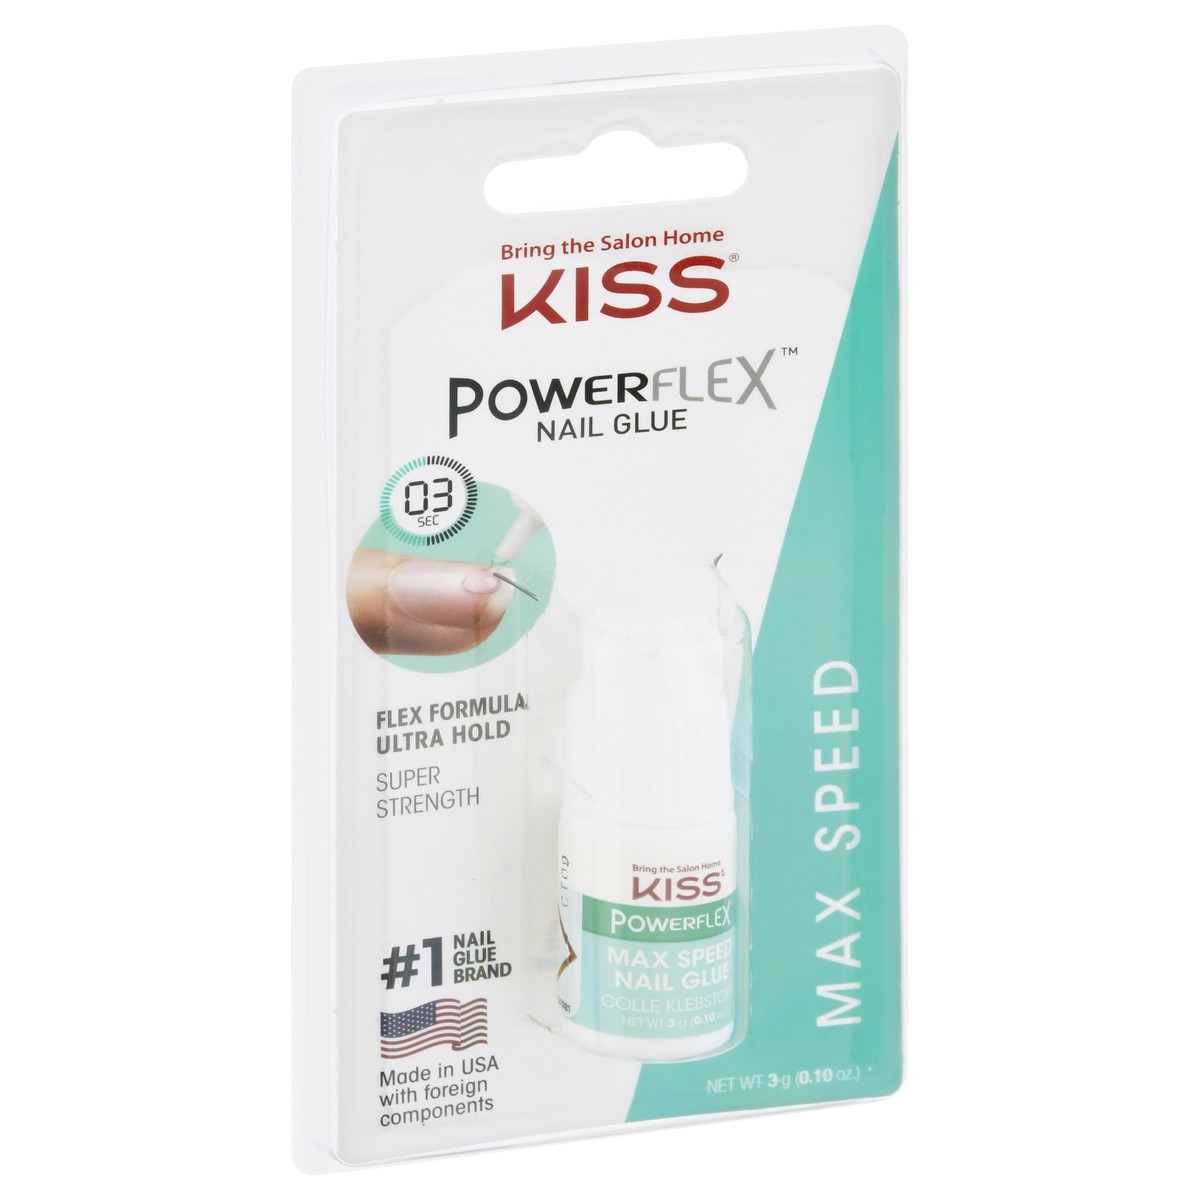 KISS Maximum Speed Nail Glue Set 3g (0.10 oz) - 100 pcs: TrueGether.com